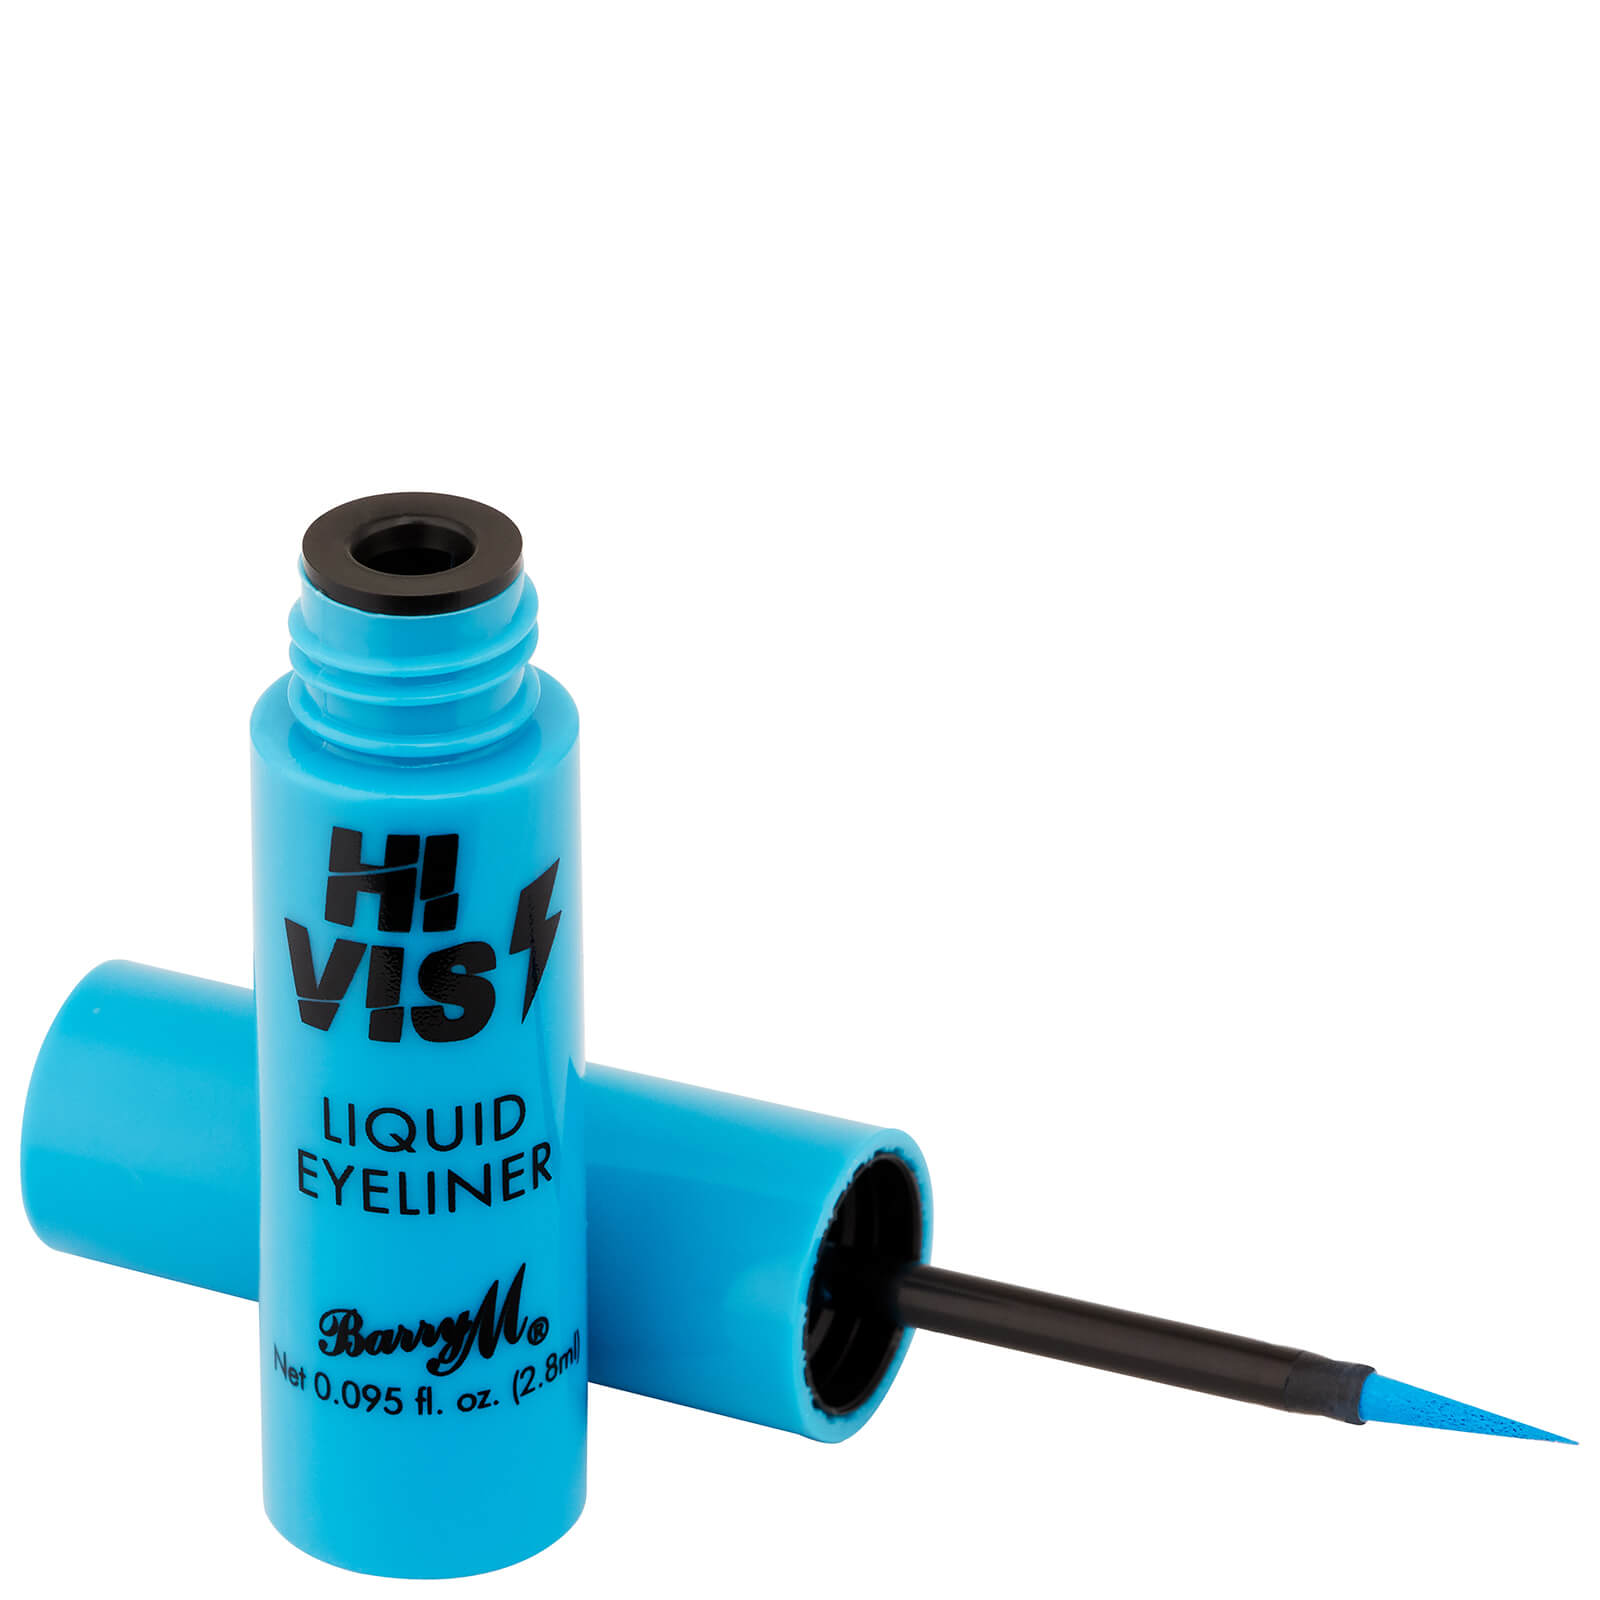 Barry M Cosmetics Hi Vis Liquid Eyeliner 2.8ml (Various Shades) - Amp up